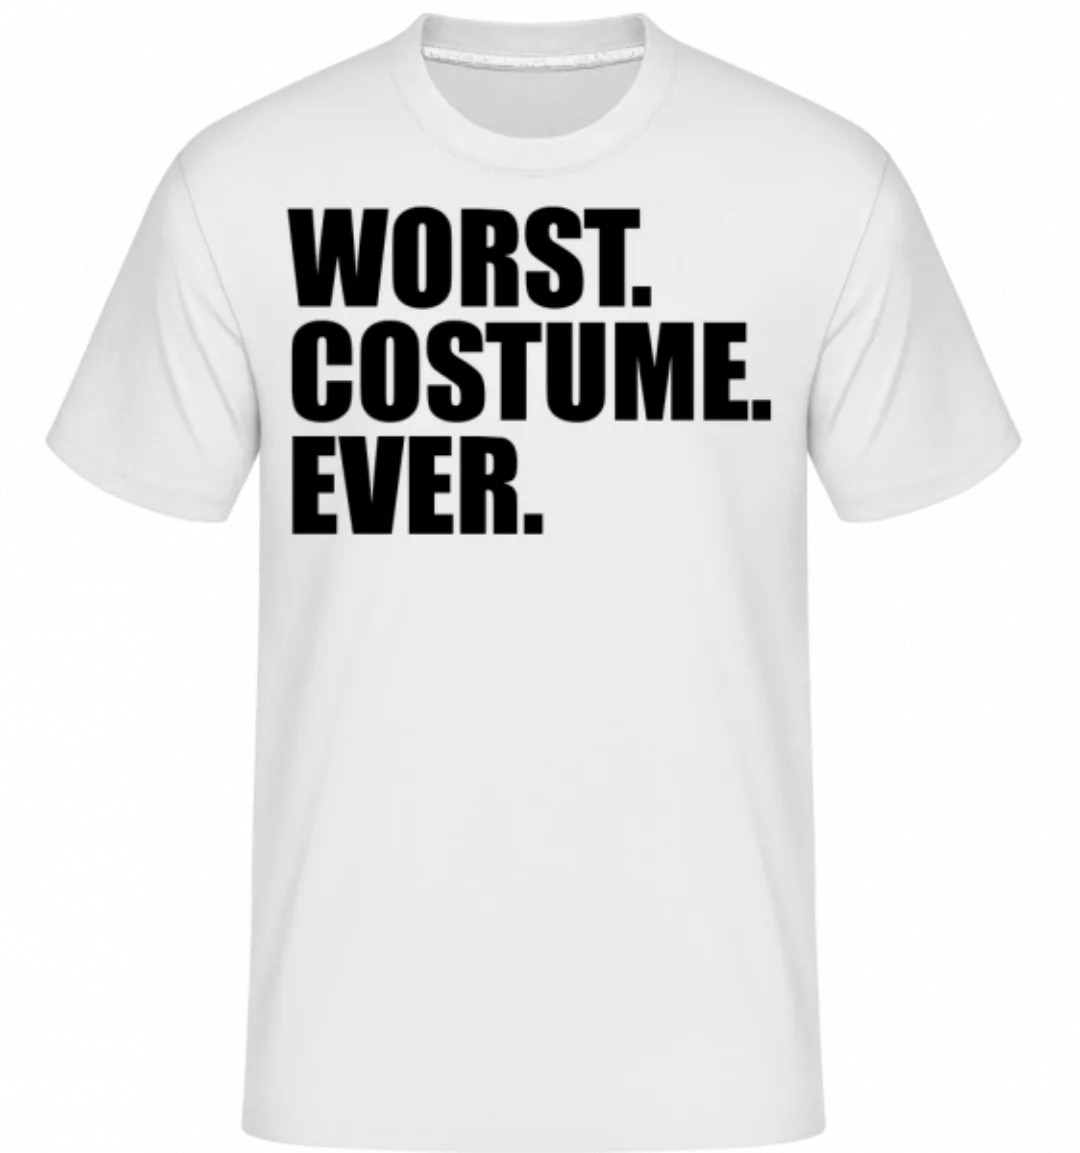 Worst. Costume. Ever. · Shirtinator Männer T-Shirt günstig online kaufen